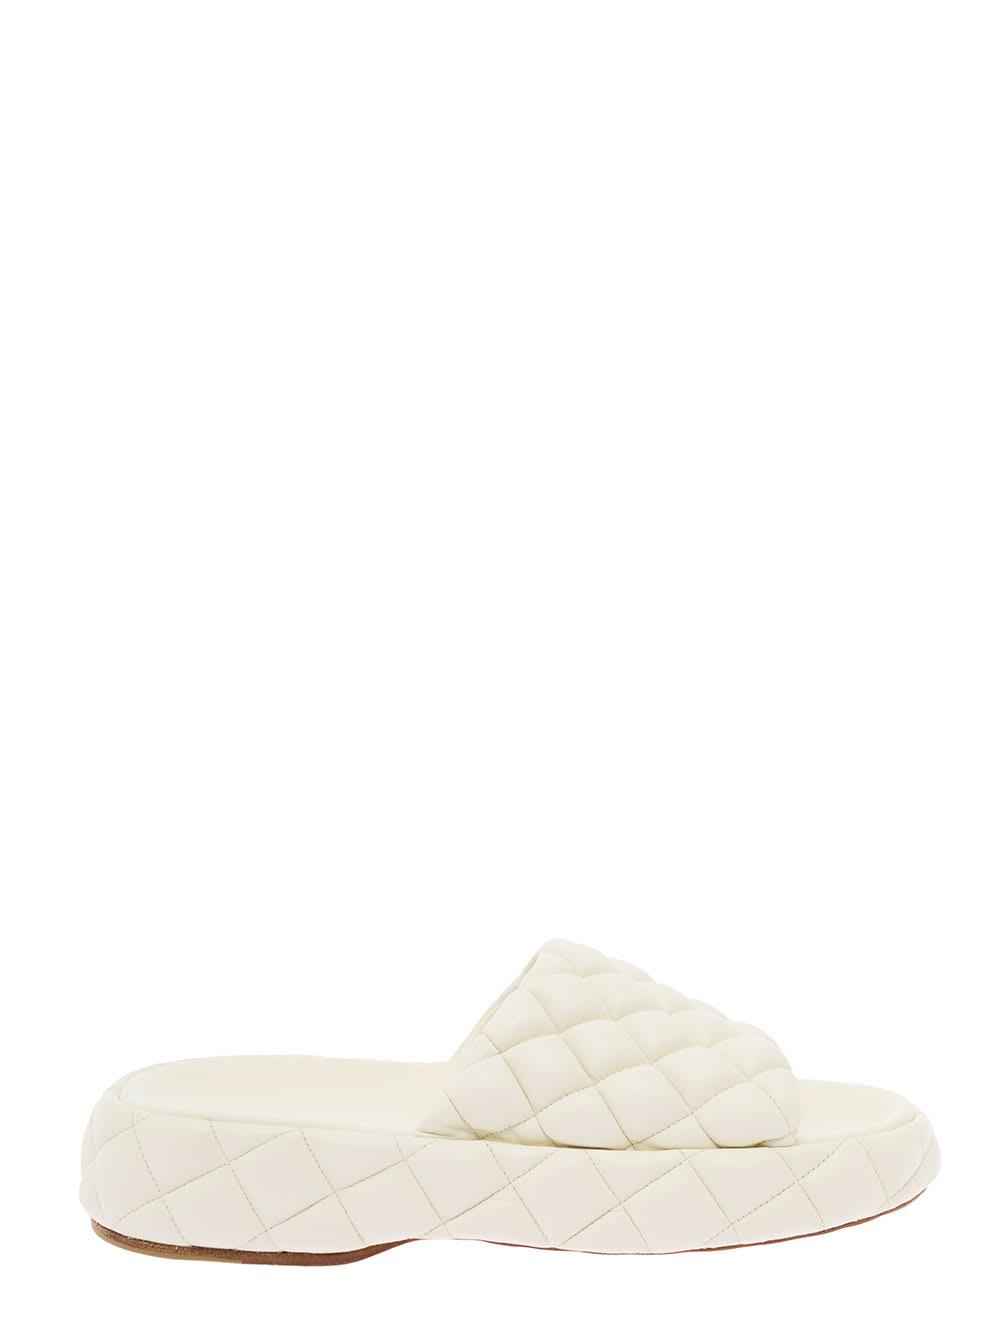 Bottega Veneta White Quilted Leather Slide Sandals Bottega Veneta Woman